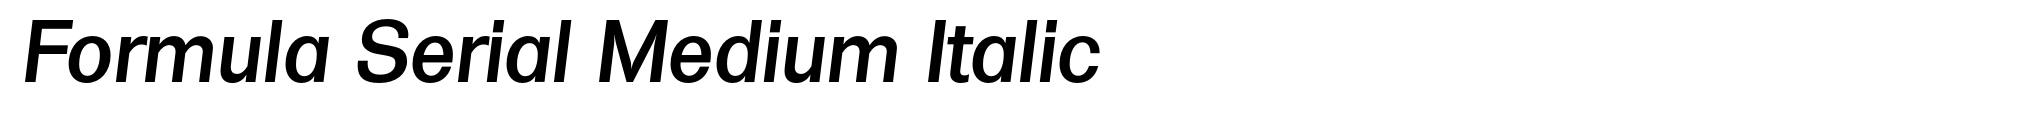 Formula Serial Medium Italic image